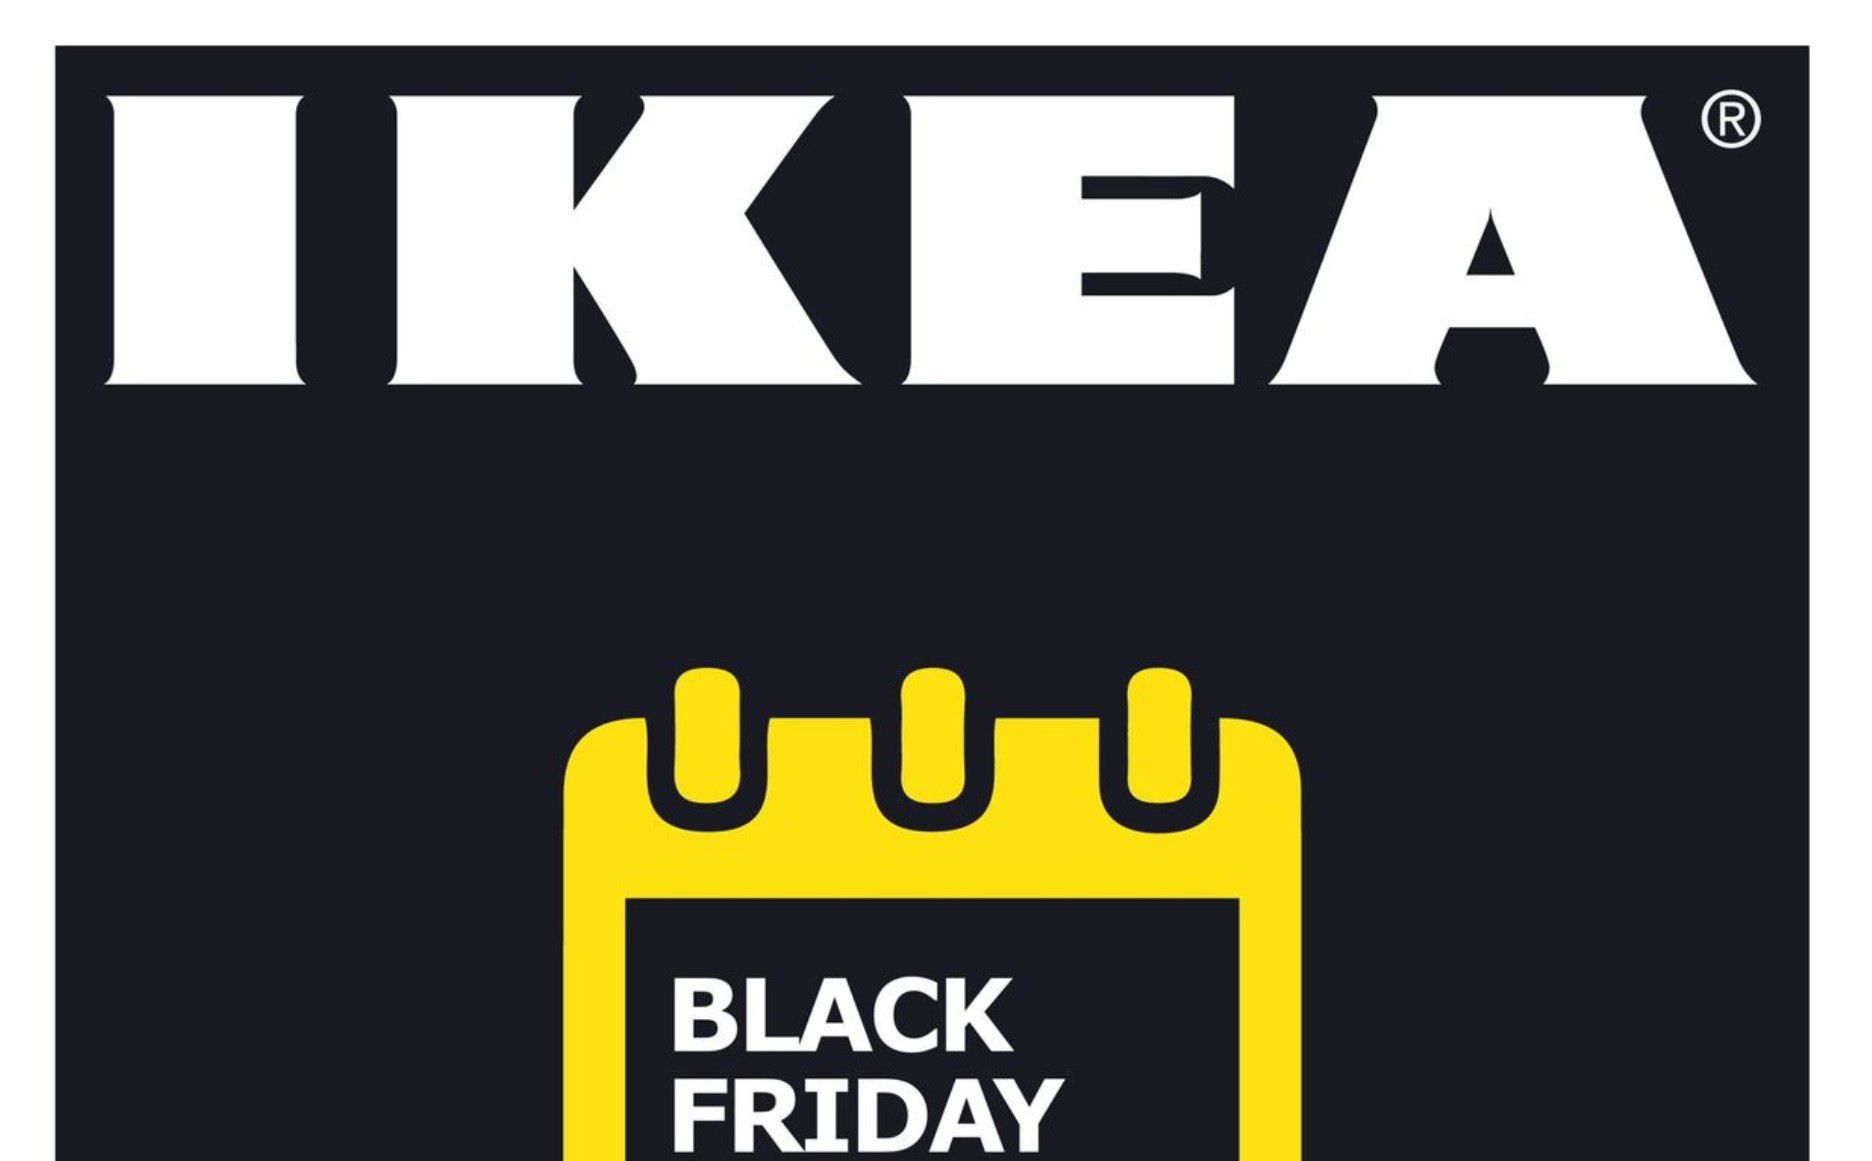 Schema Scarp emmer IKEA Canada Black Friday Flyer Sale Deals 2016 - Canadian Freebies,  Coupons, Deals, Bargains, Flyers, Contests Canada Canadian Freebies,  Coupons, Deals, Bargains, Flyers, Contests Canada